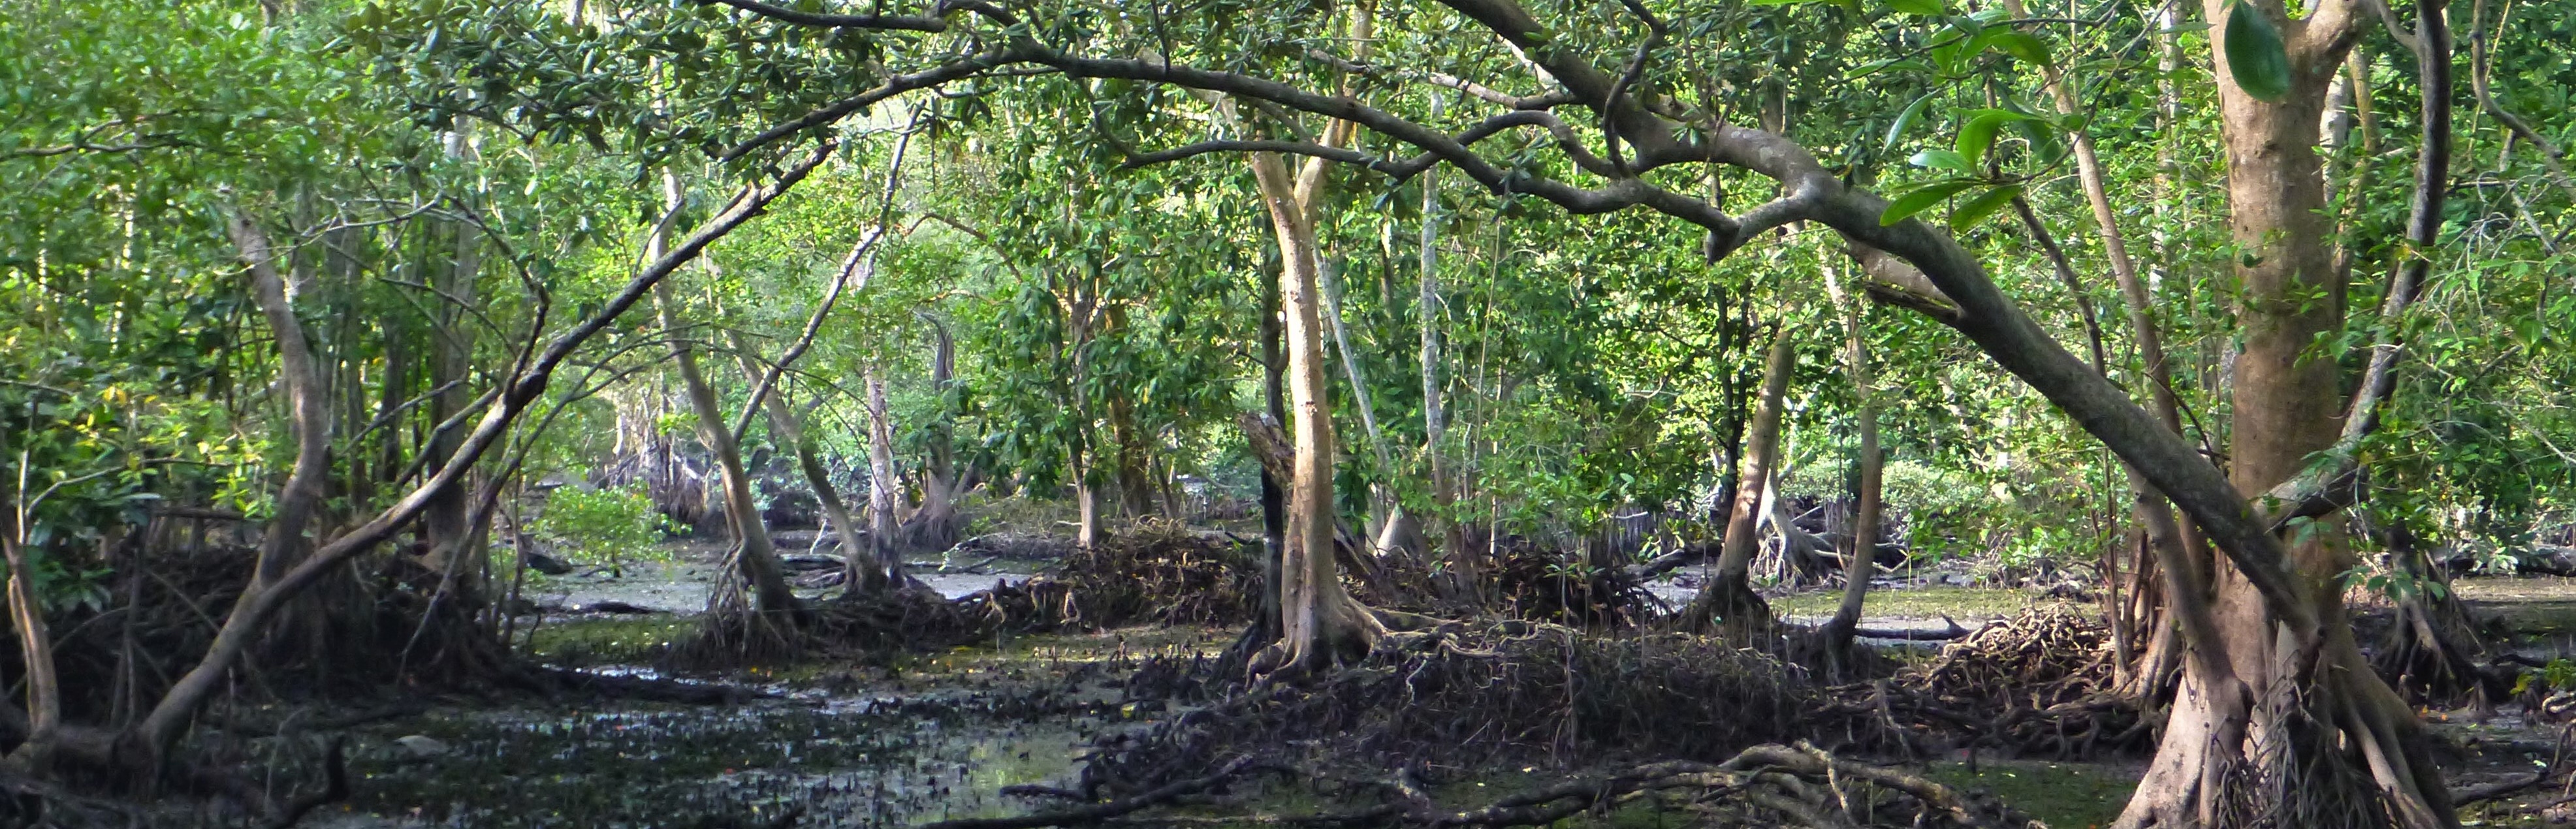 Mangrove trees in a muddy swamp 